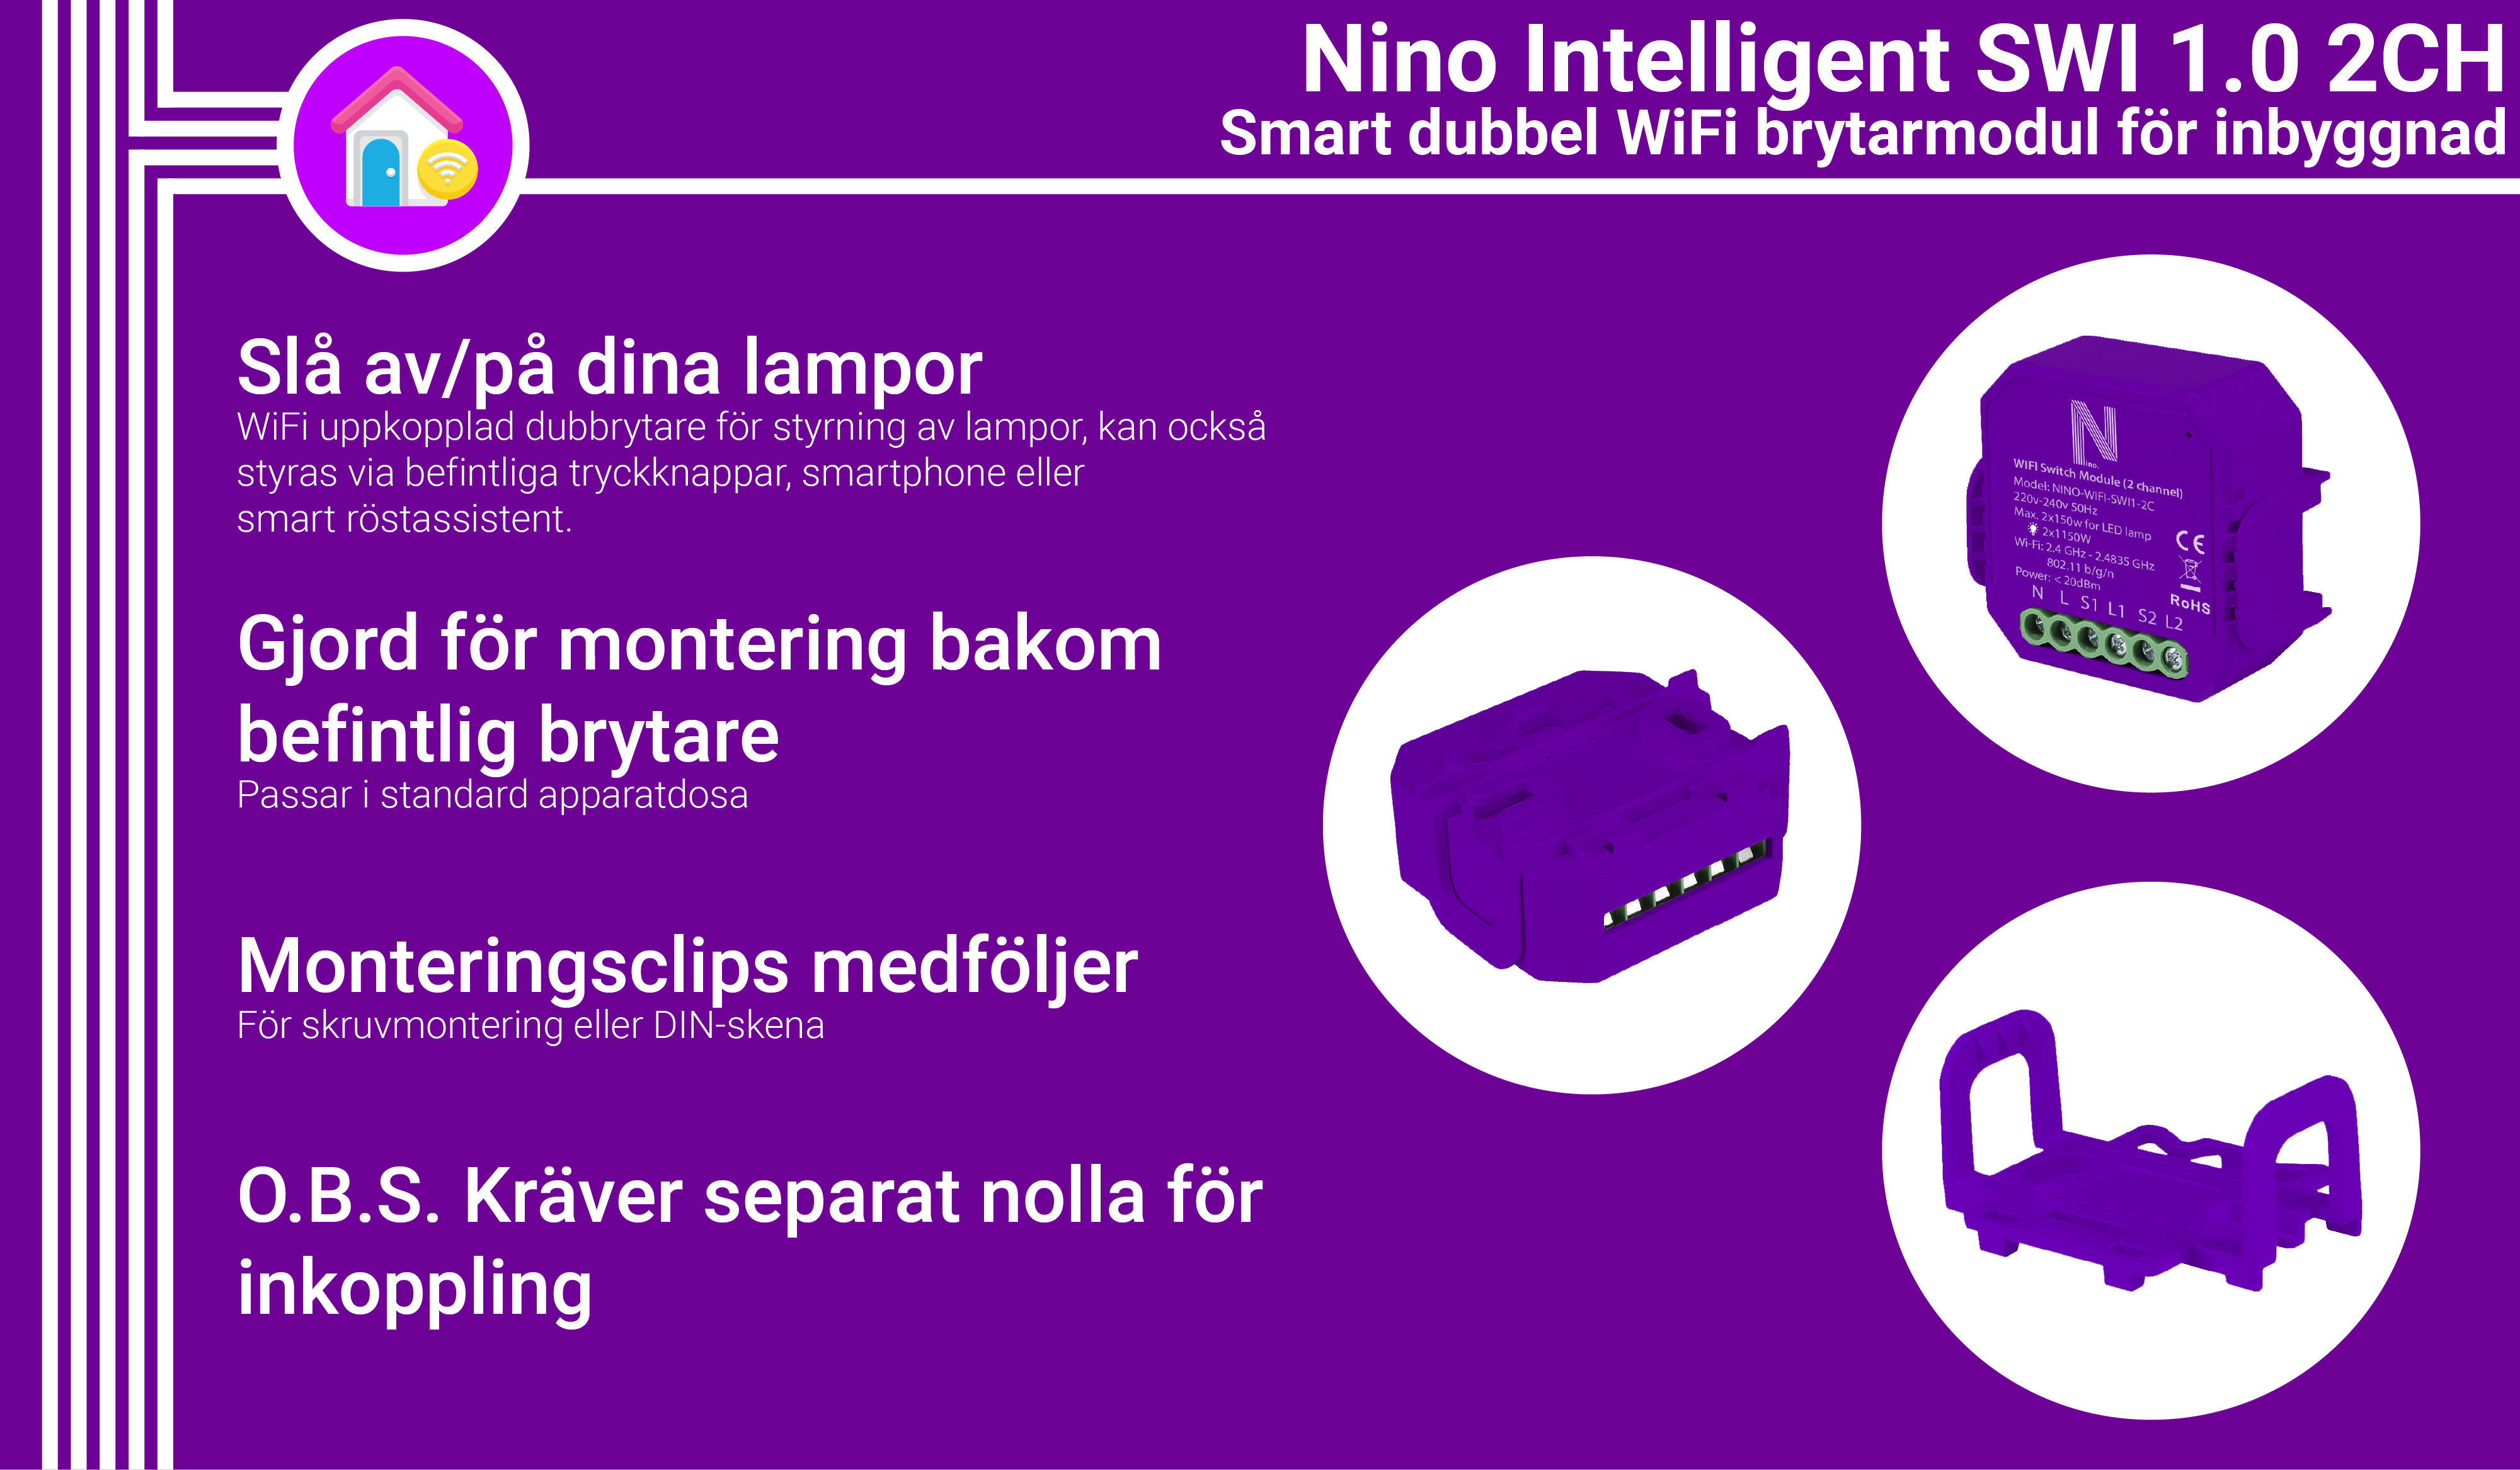 Nino Intelligent SWI 1.0 2CH, WiFi Smart dubbel brytarmodul